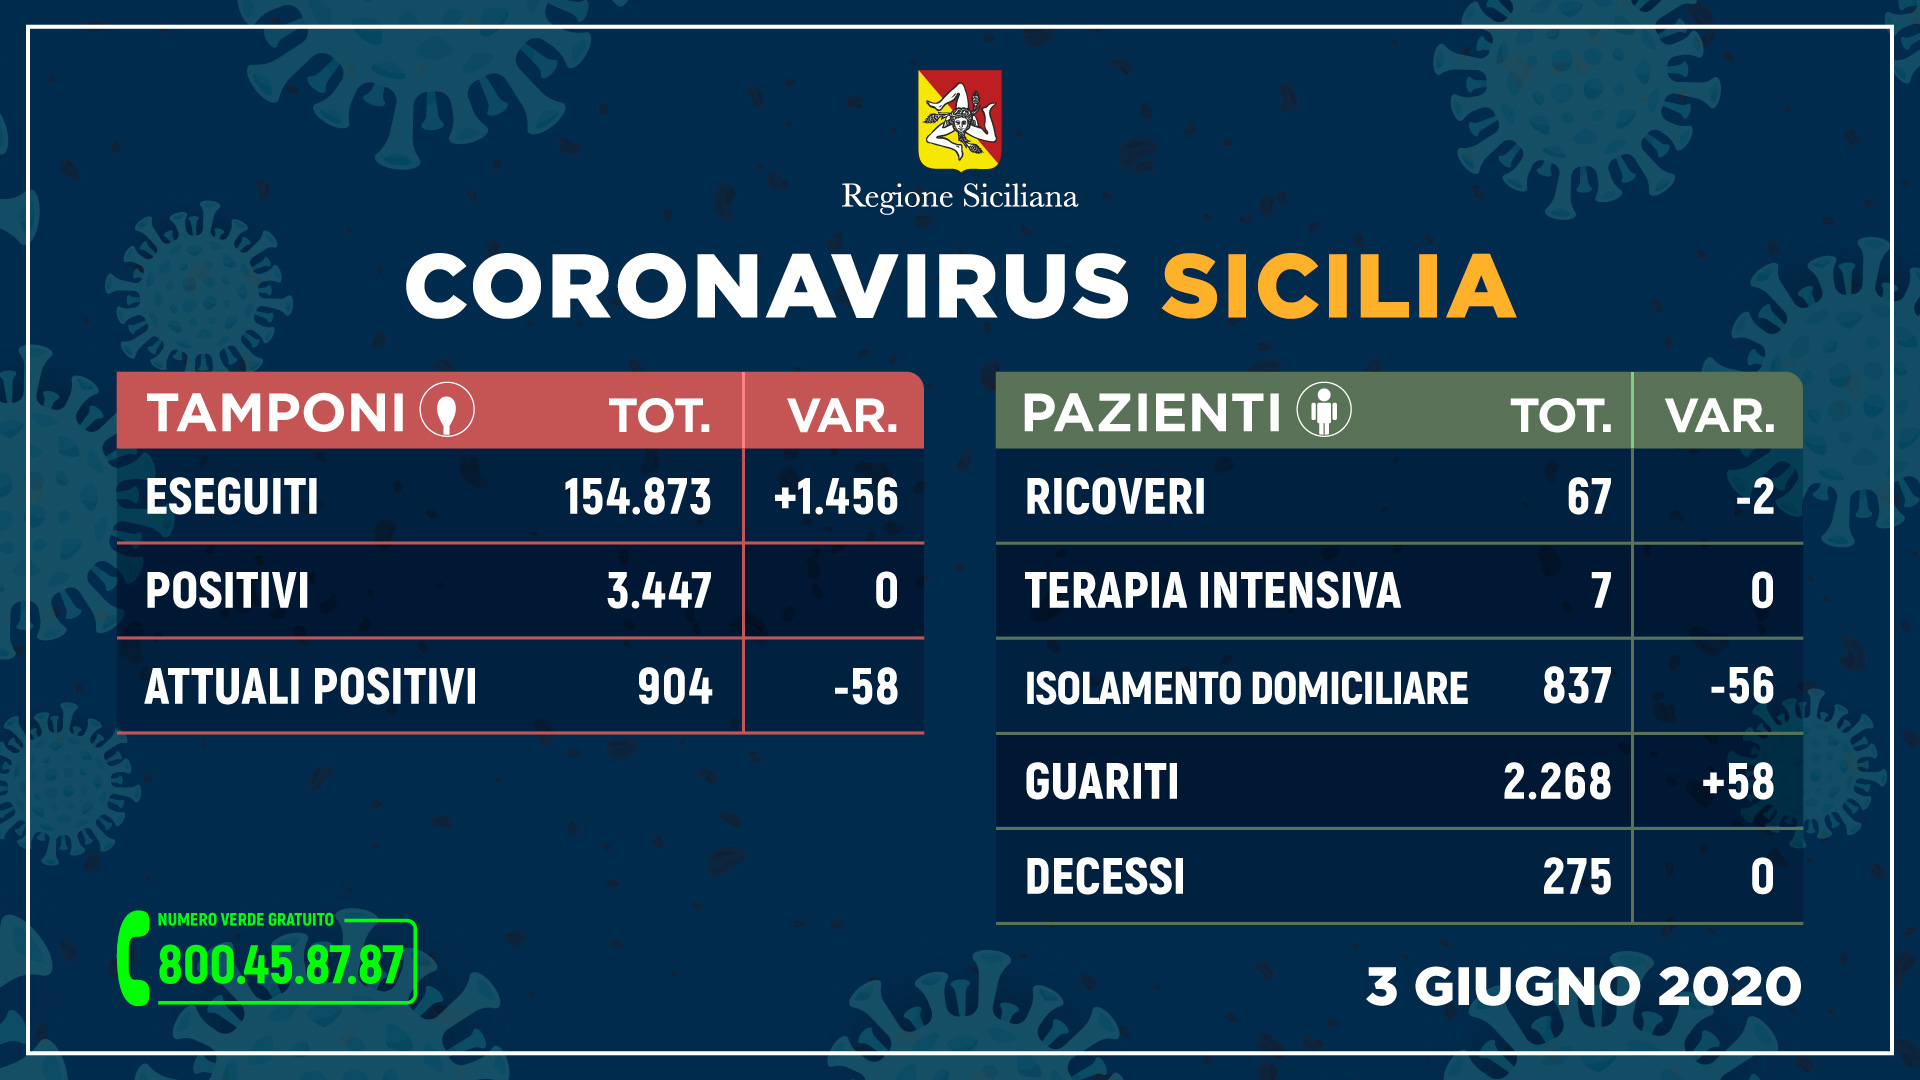 Coronavirus, in Sicilia niente vittime né nuovi contagi